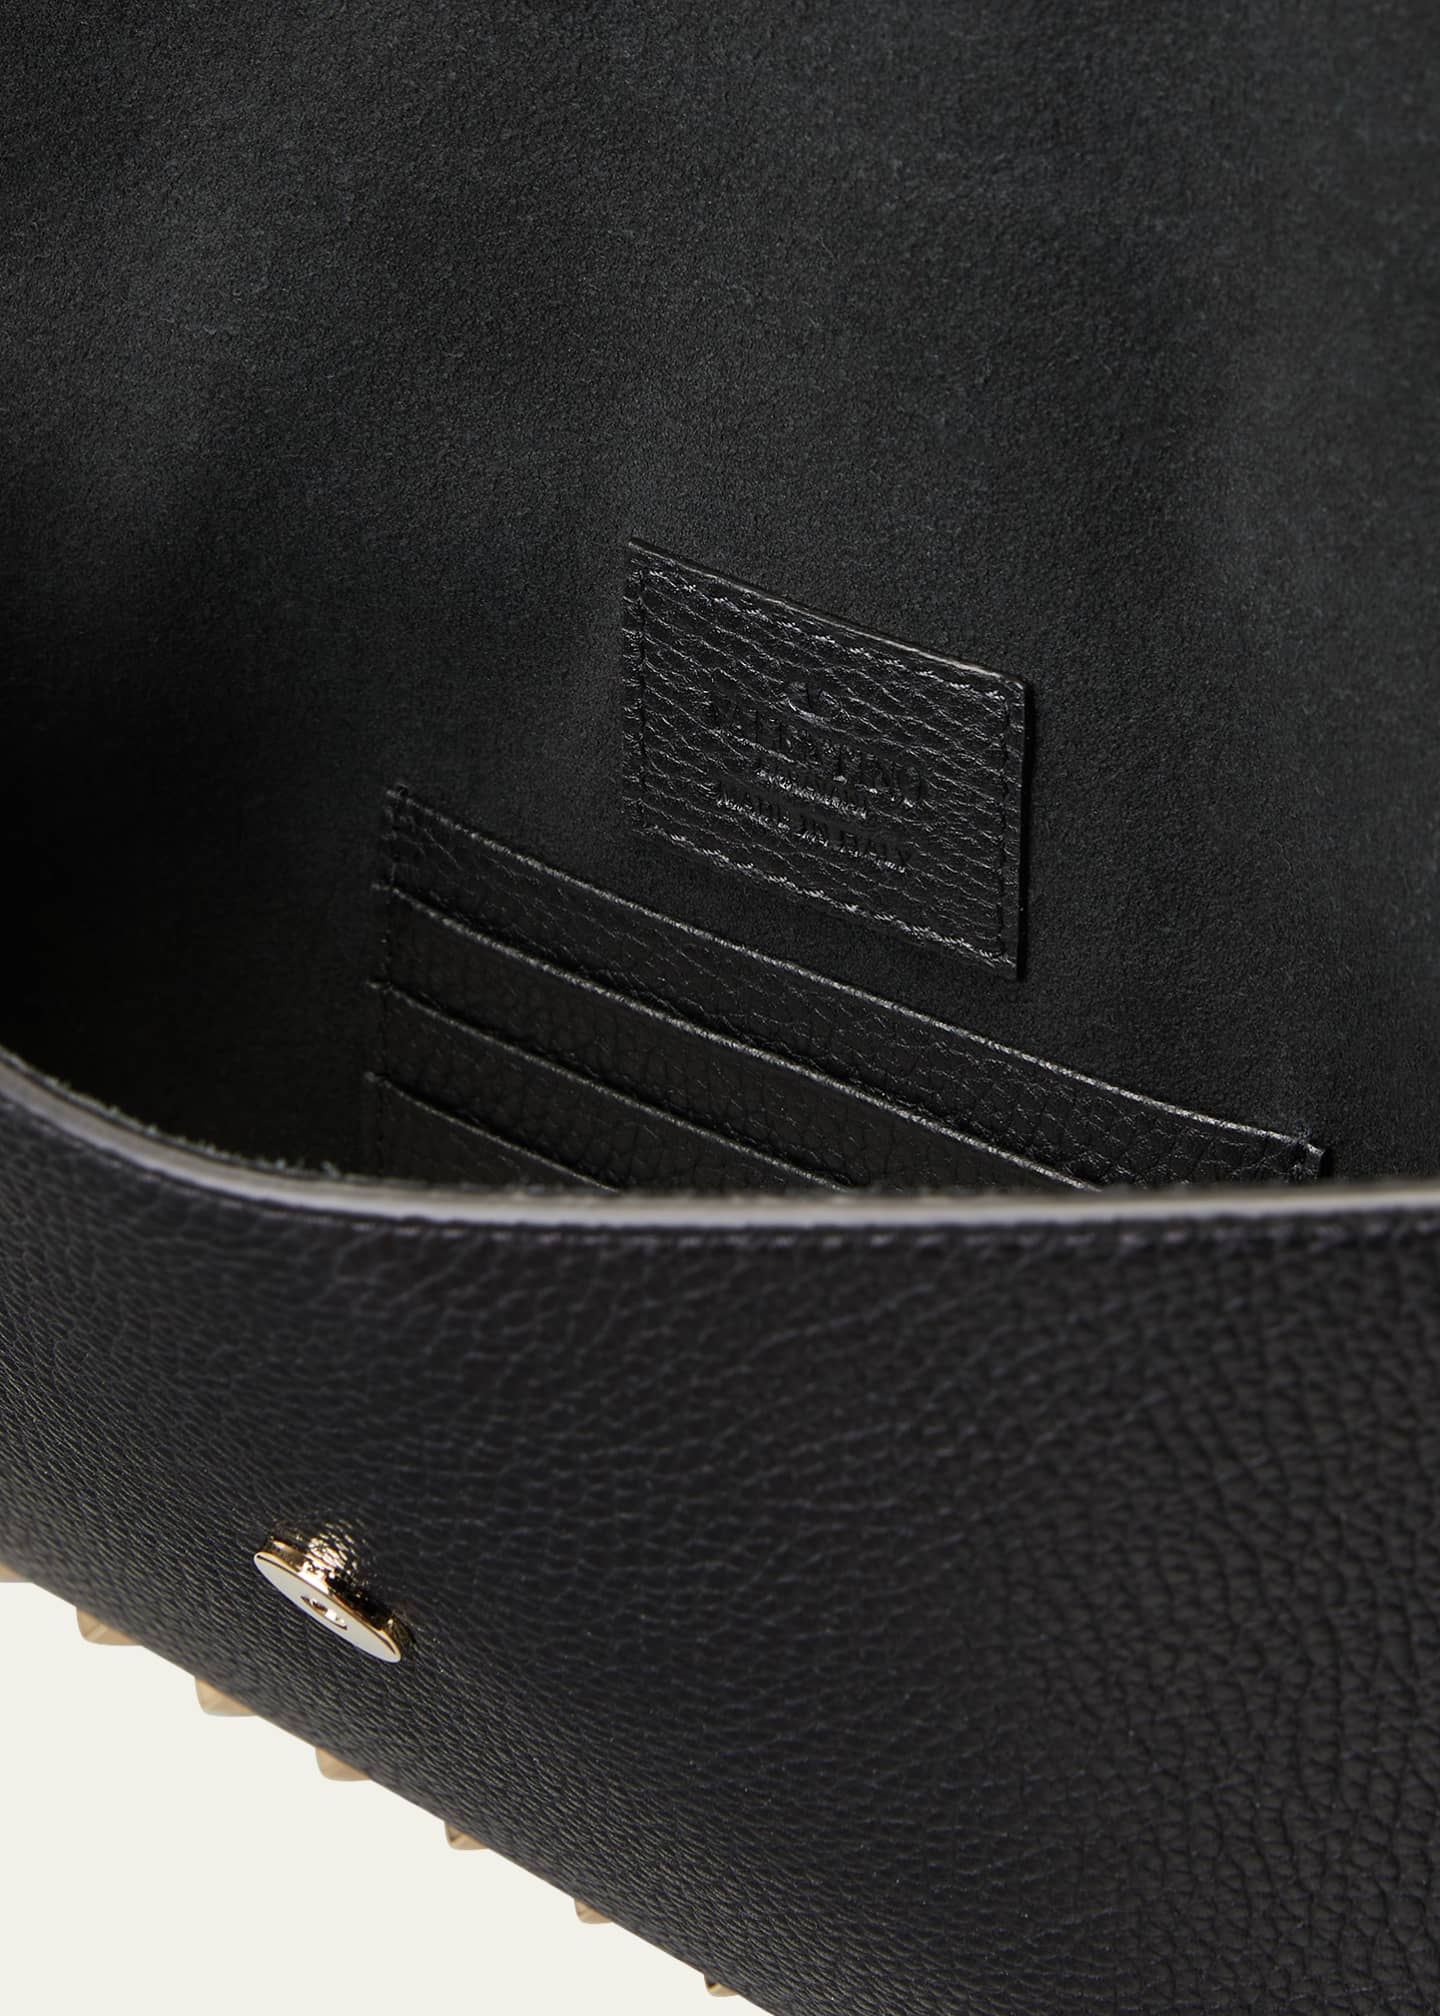 Valentino Garavani Rockstud Envelope Leather Clutch Bag - Farfetch